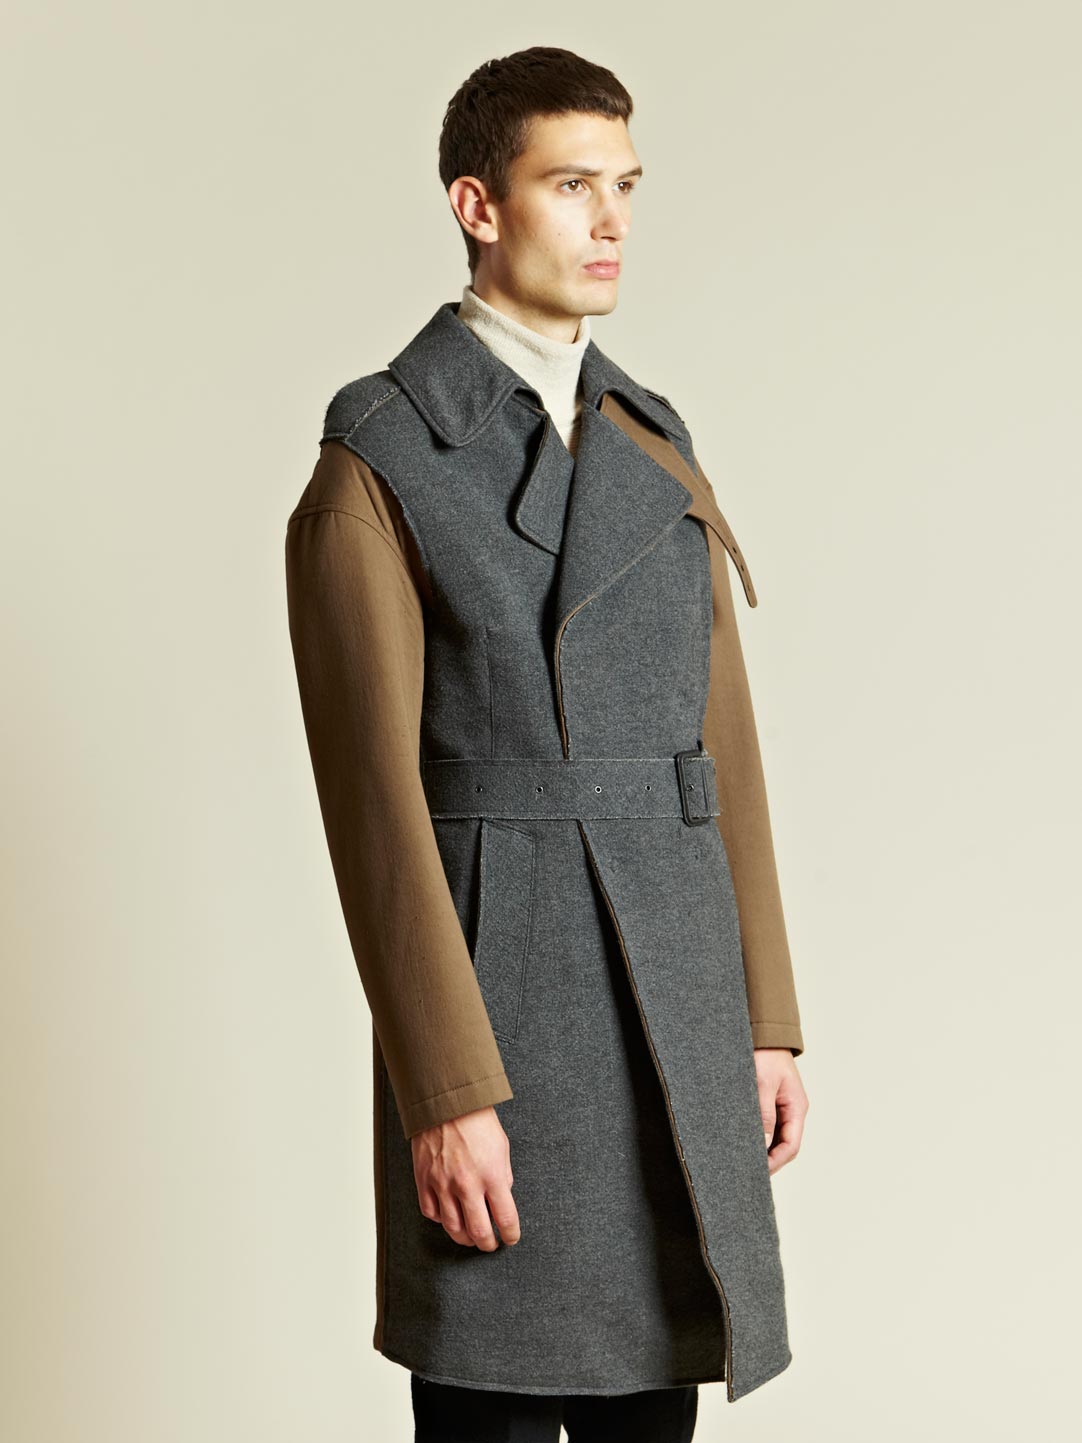 Lyst - Lanvin Lanvin Mens Contrast Manteau Coat in Natural for Men